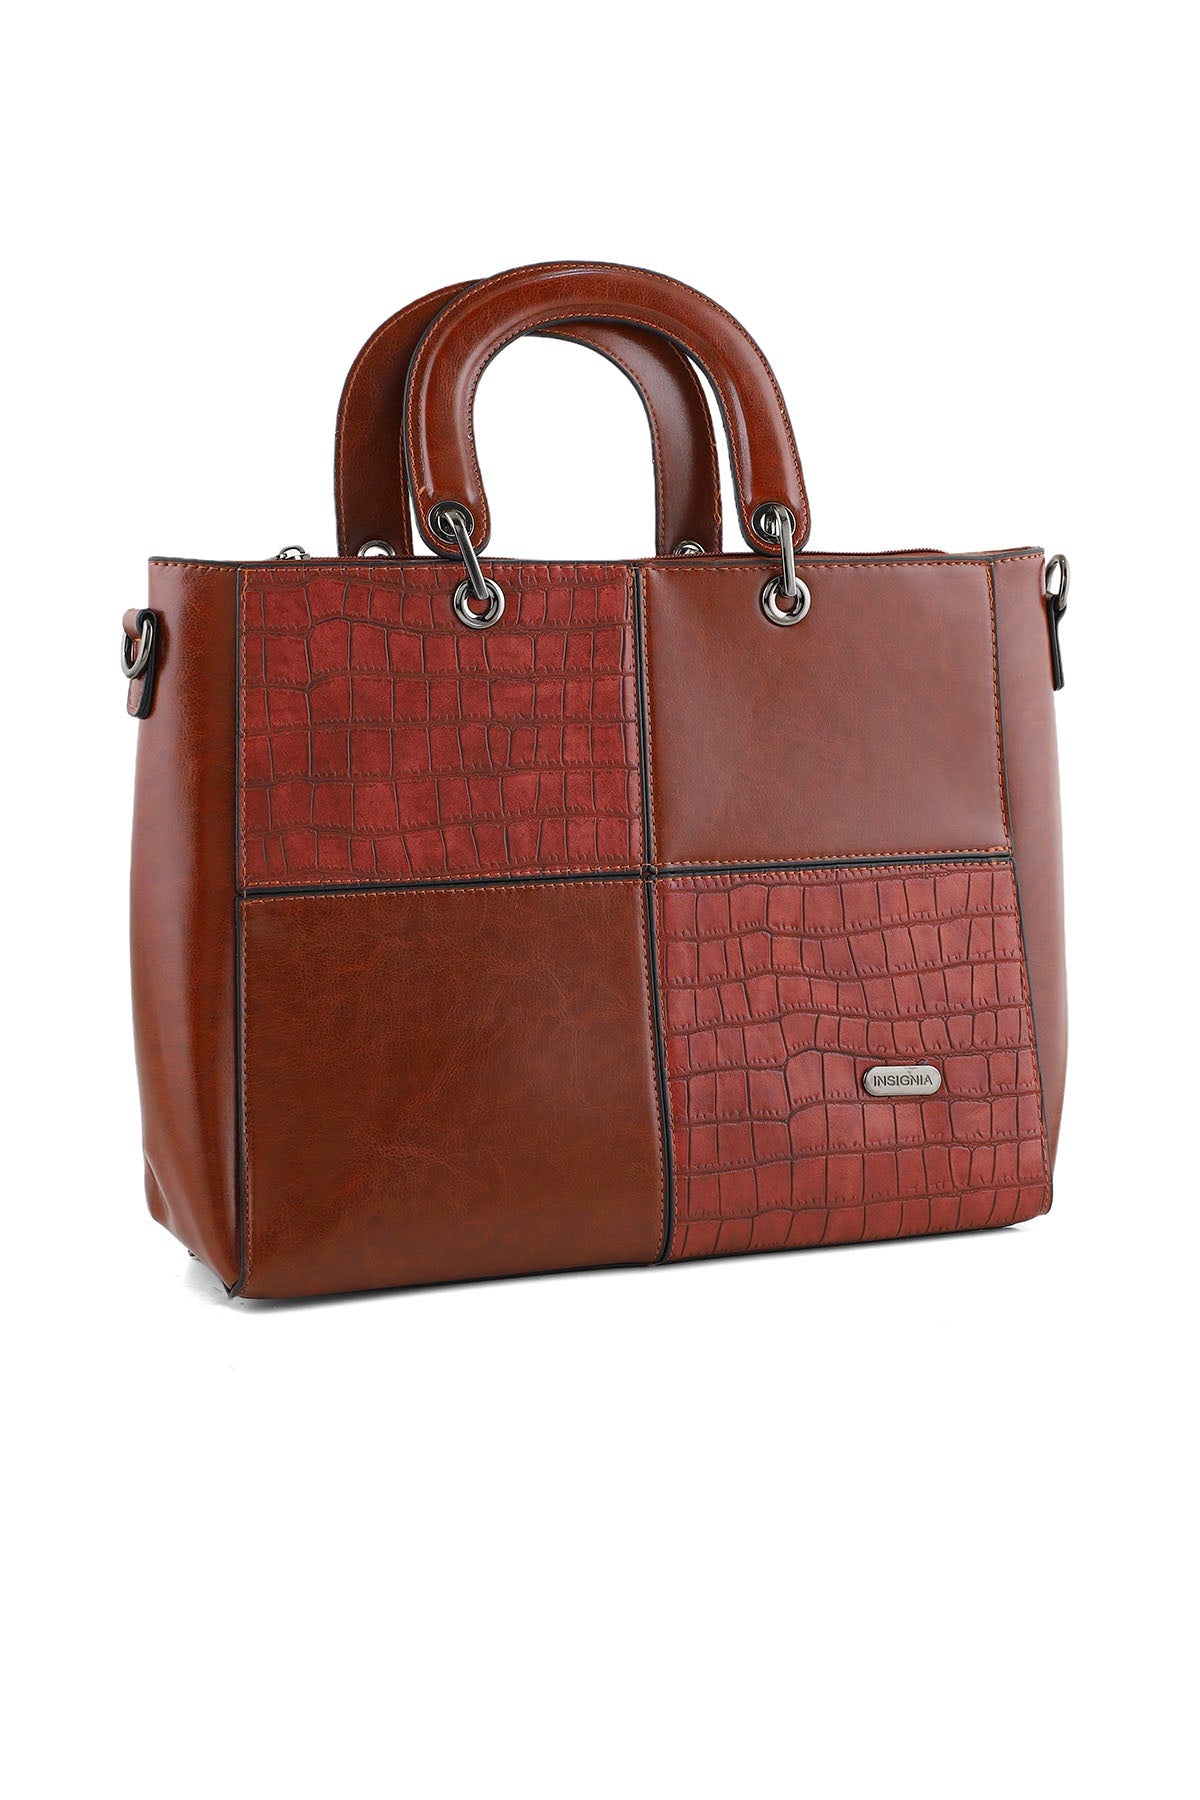 Top Handle Hand Bags B14979-Brown